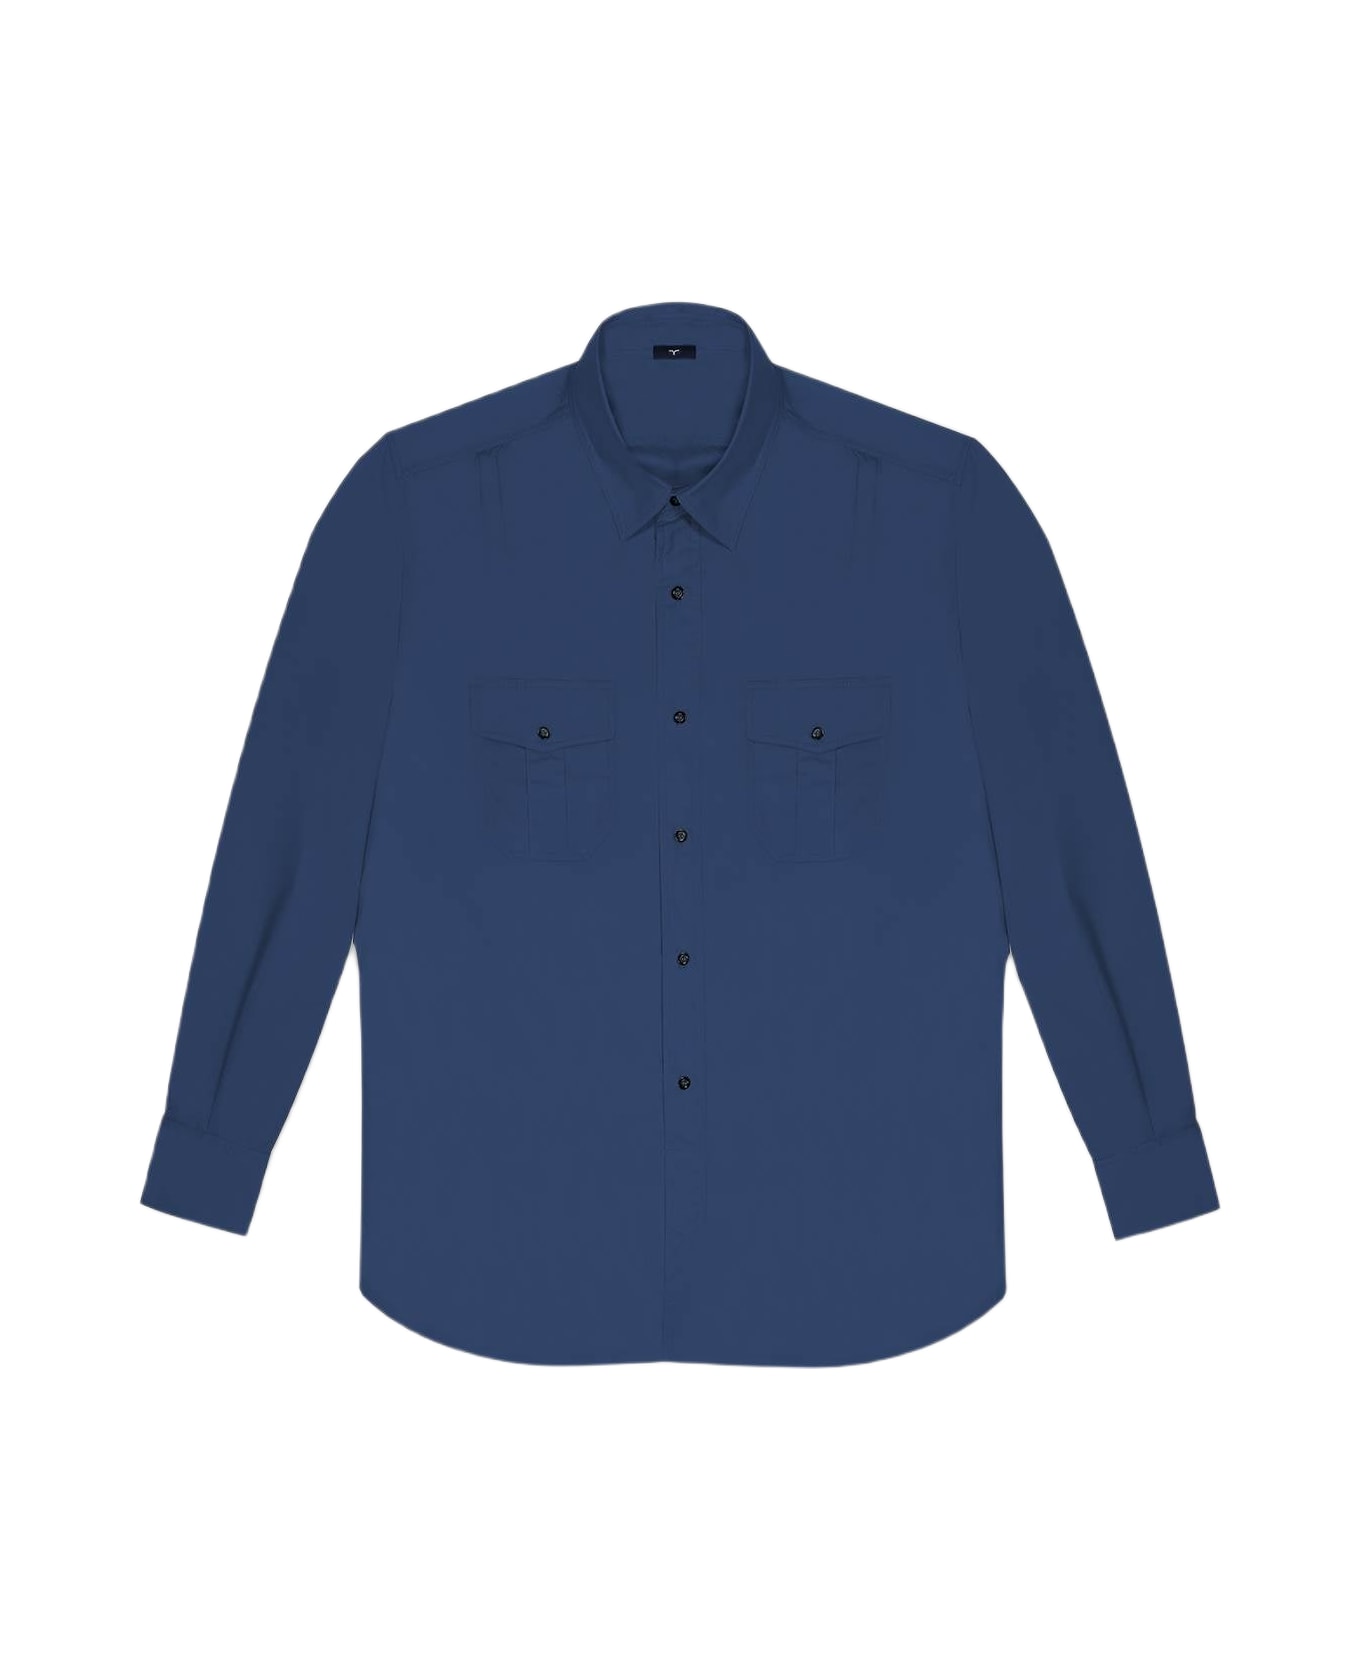 Larusmiani Military Cotton Shirt Shirt - Blue シャツ